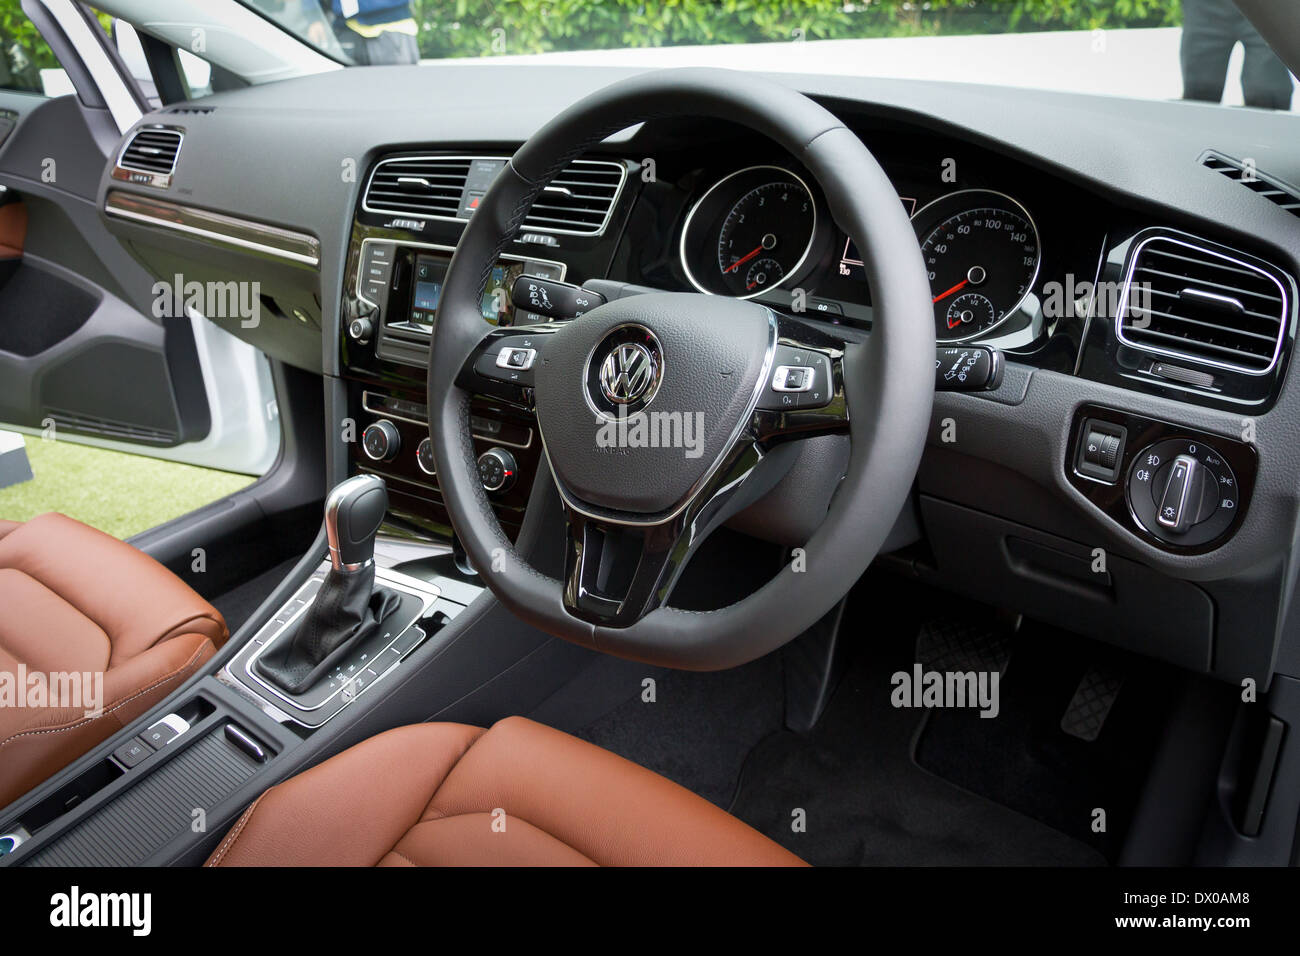 Volkswagen Golf VII 2013 Model drive room Stock Photo - Alamy